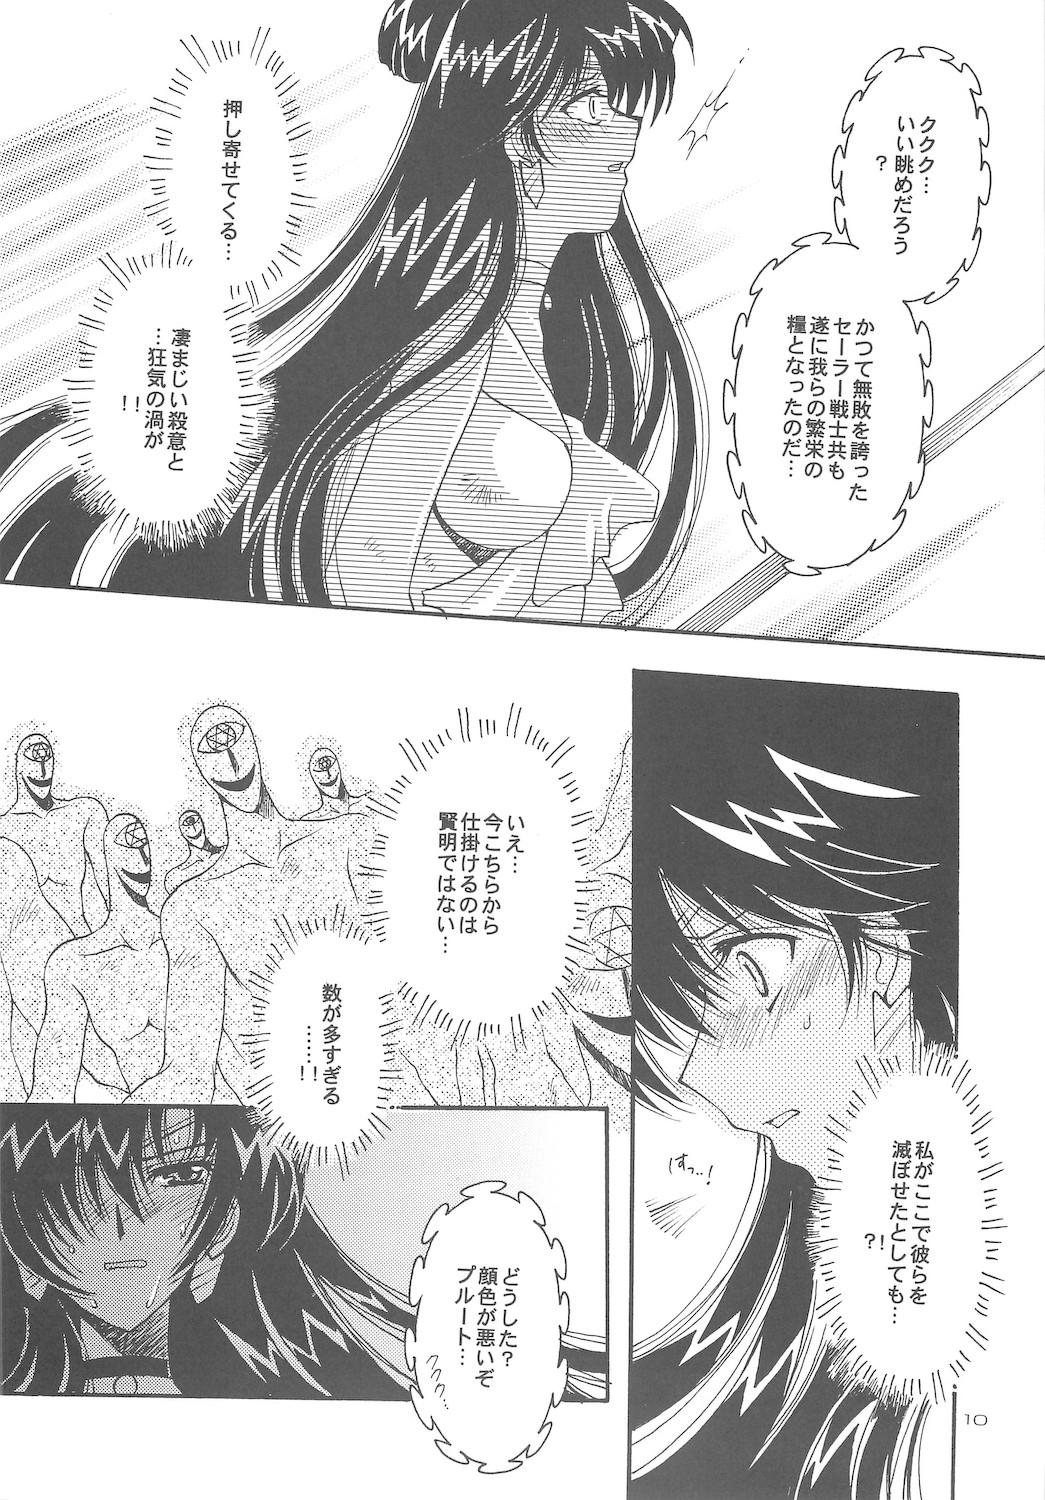 Spread Owaru Sekai dai 4 shou - Sailor moon Studs - Page 10